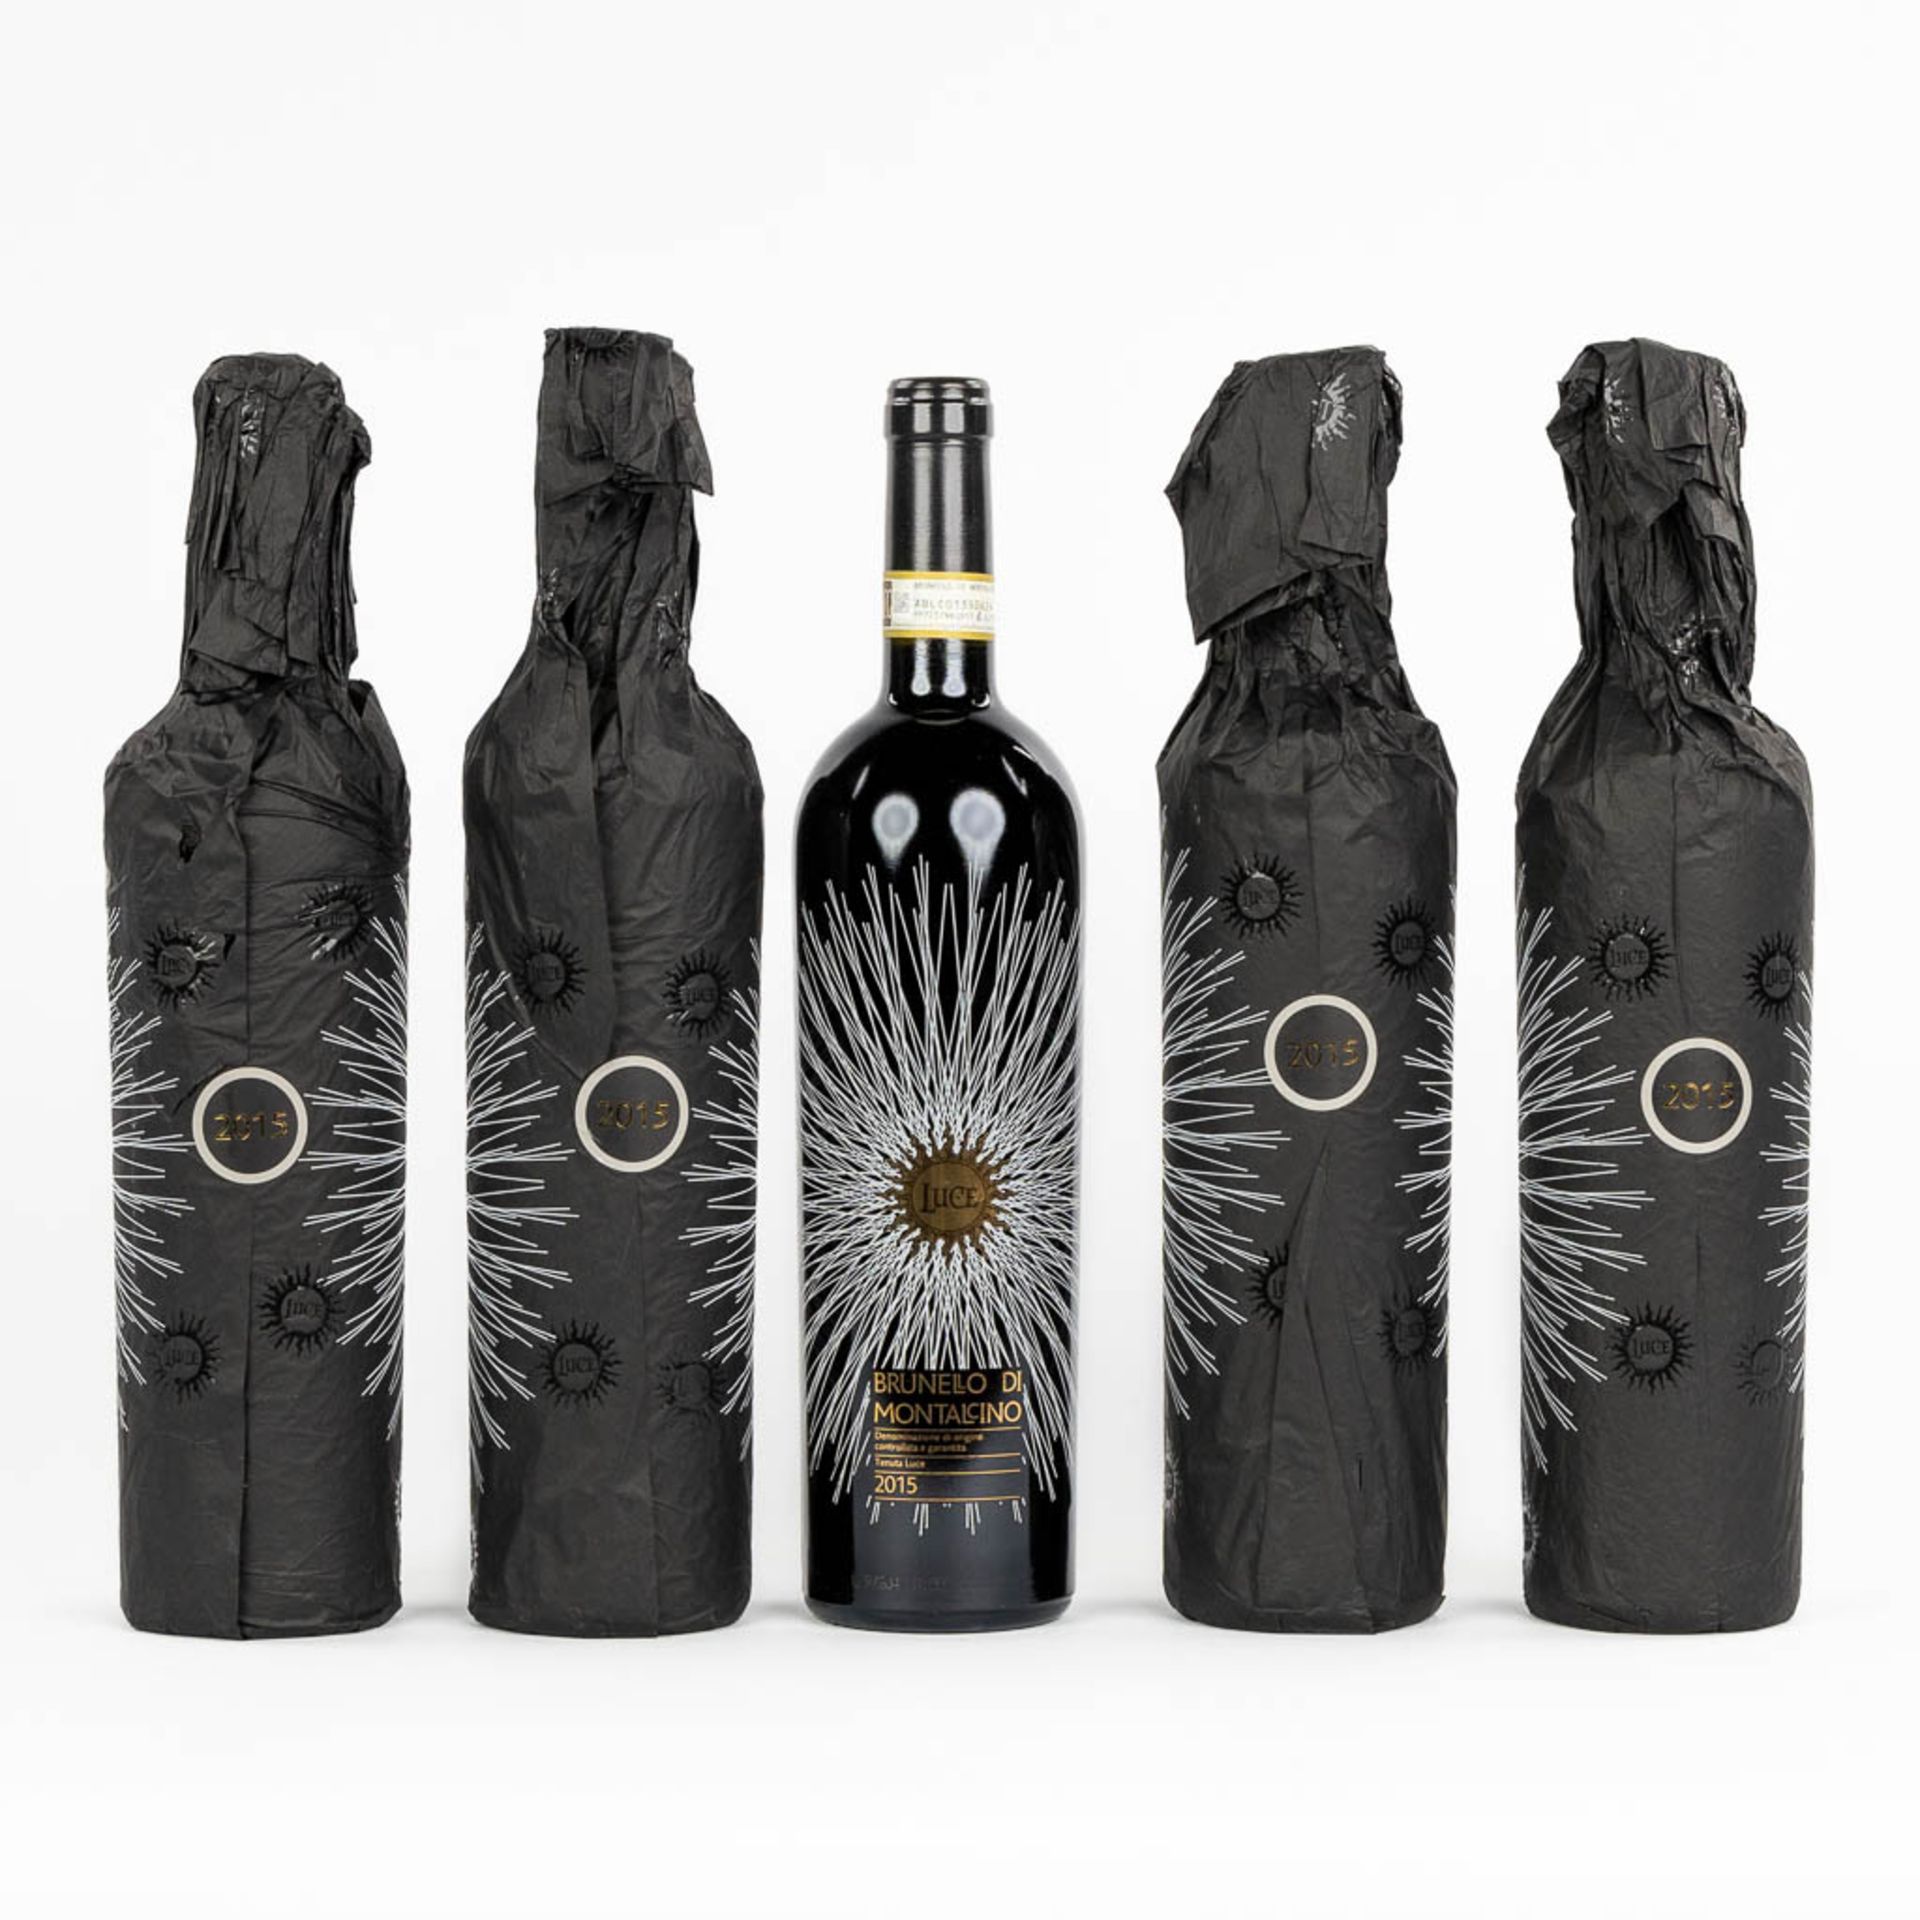 2015 Luce Brunello Di Montalcino, 5 bottles. - Bild 5 aus 7